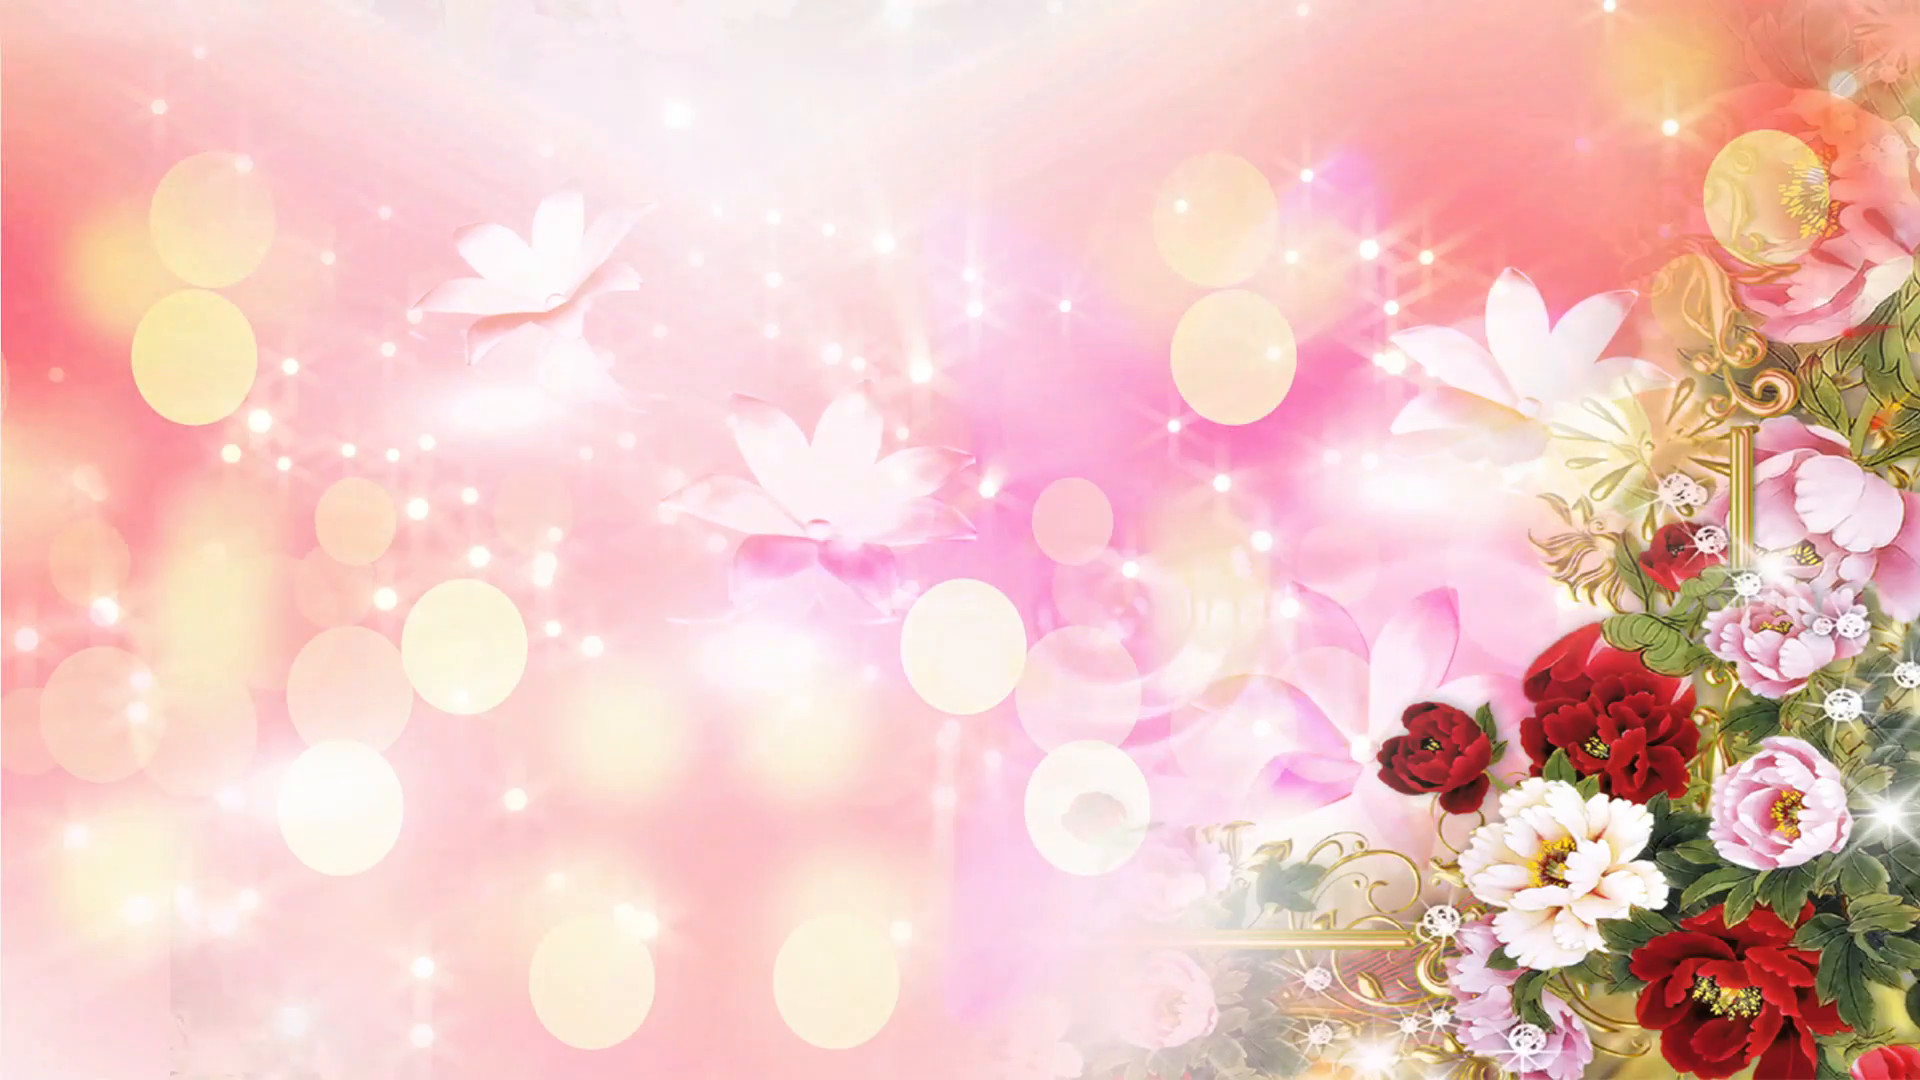 Anime Wedding Youtube Background by Koiwoeien on DeviantArt